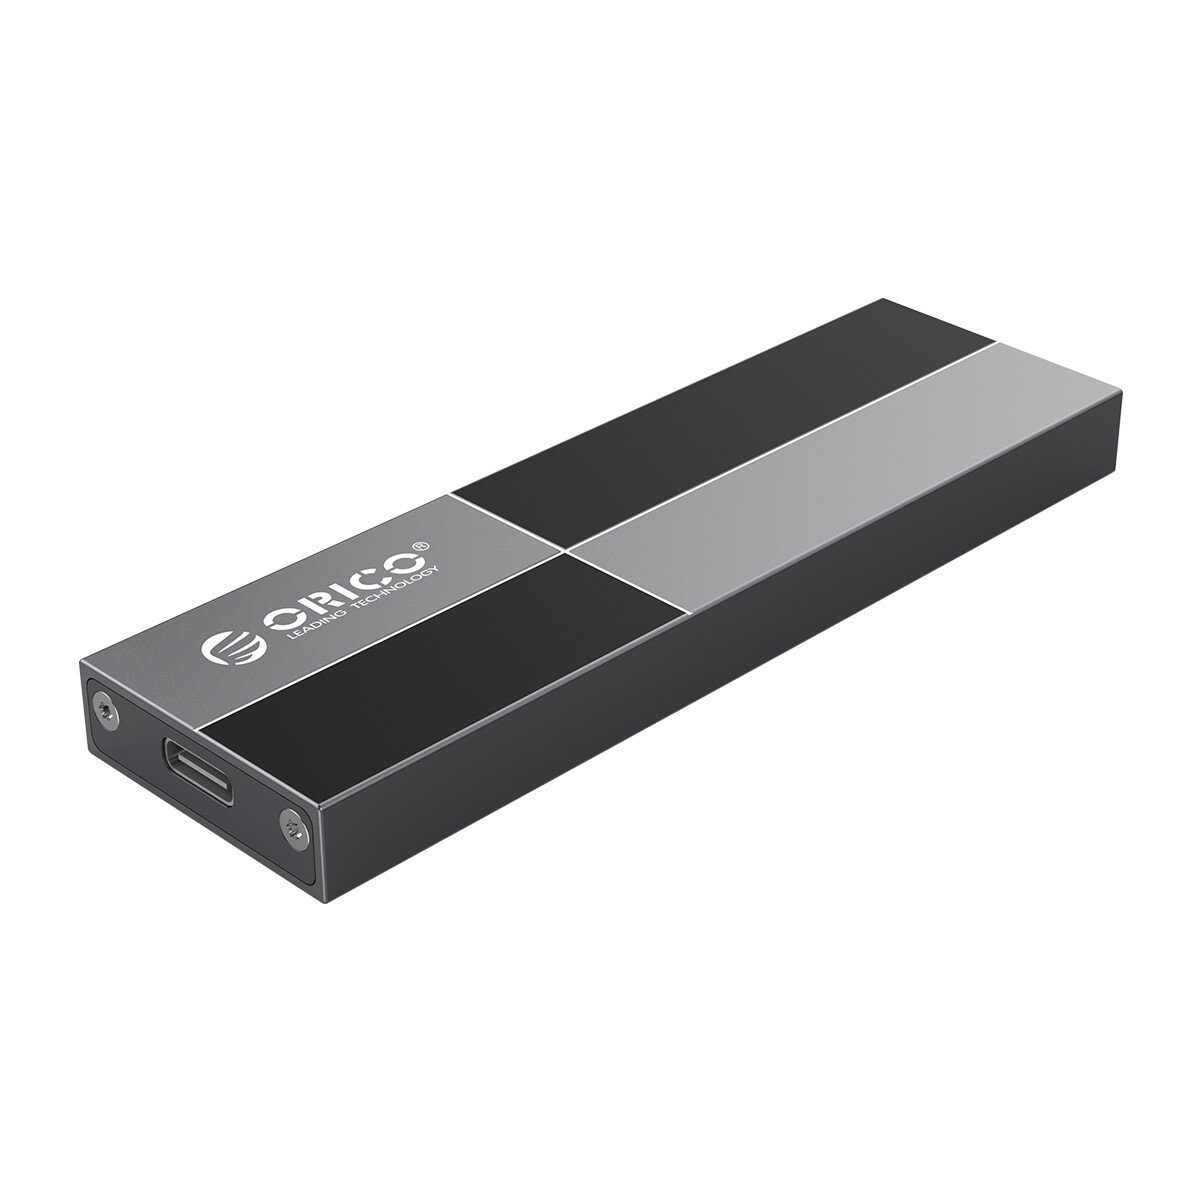 ORICO PFM2-C3 NVME M.2 SSD Enclosure 10Gbps USB3.1 Gen2 Solid State Drive Enclosure Case Hard Drive 